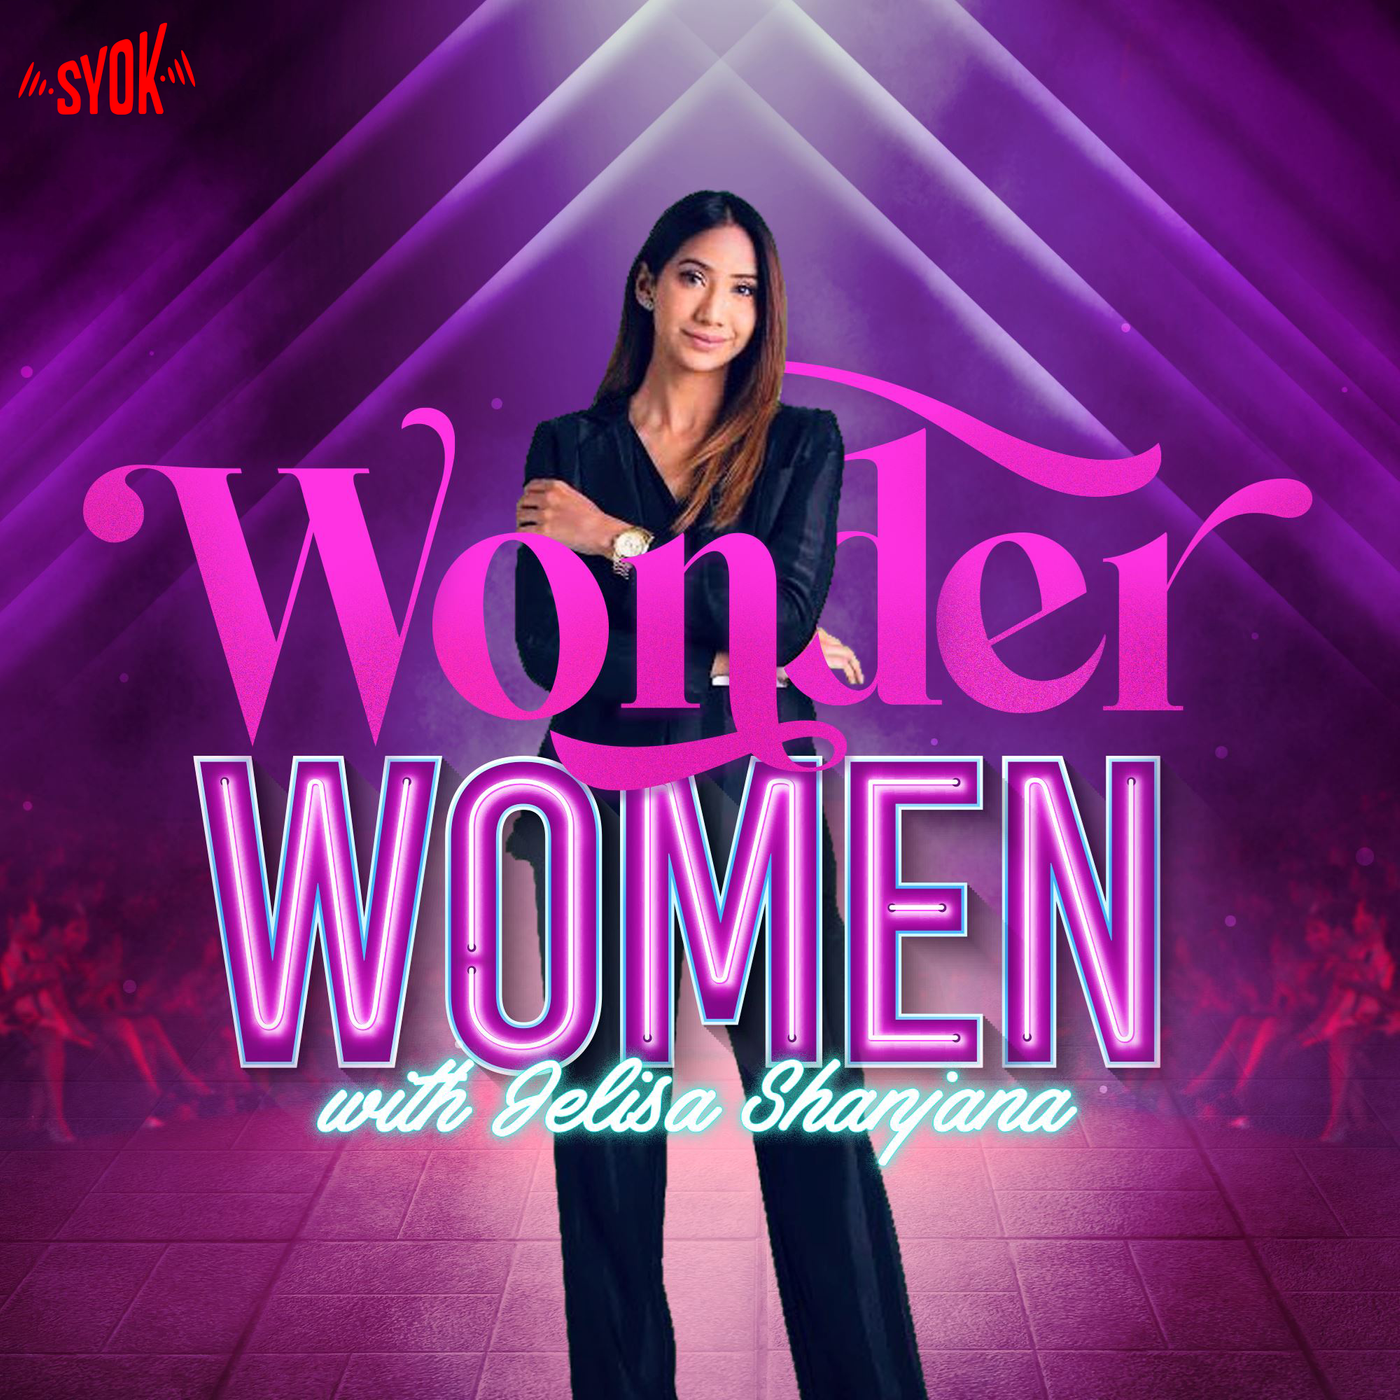 Wonder Women with Jelisa Shanjana